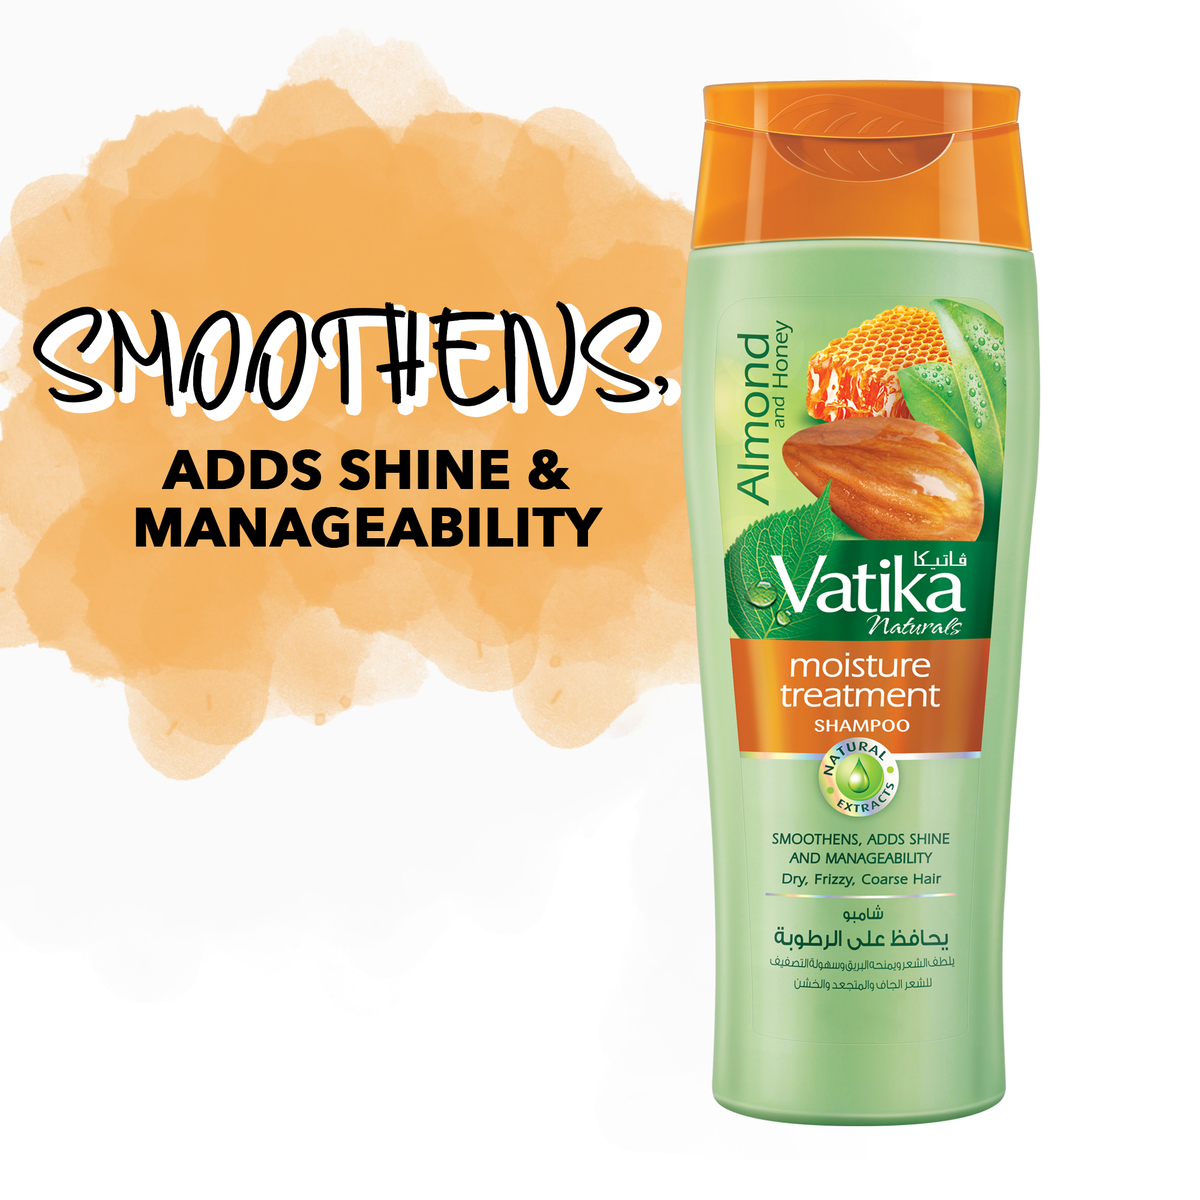 Vatika Natural Moisture Treatment Shampoo For Dry Frizzy Coarse Hair